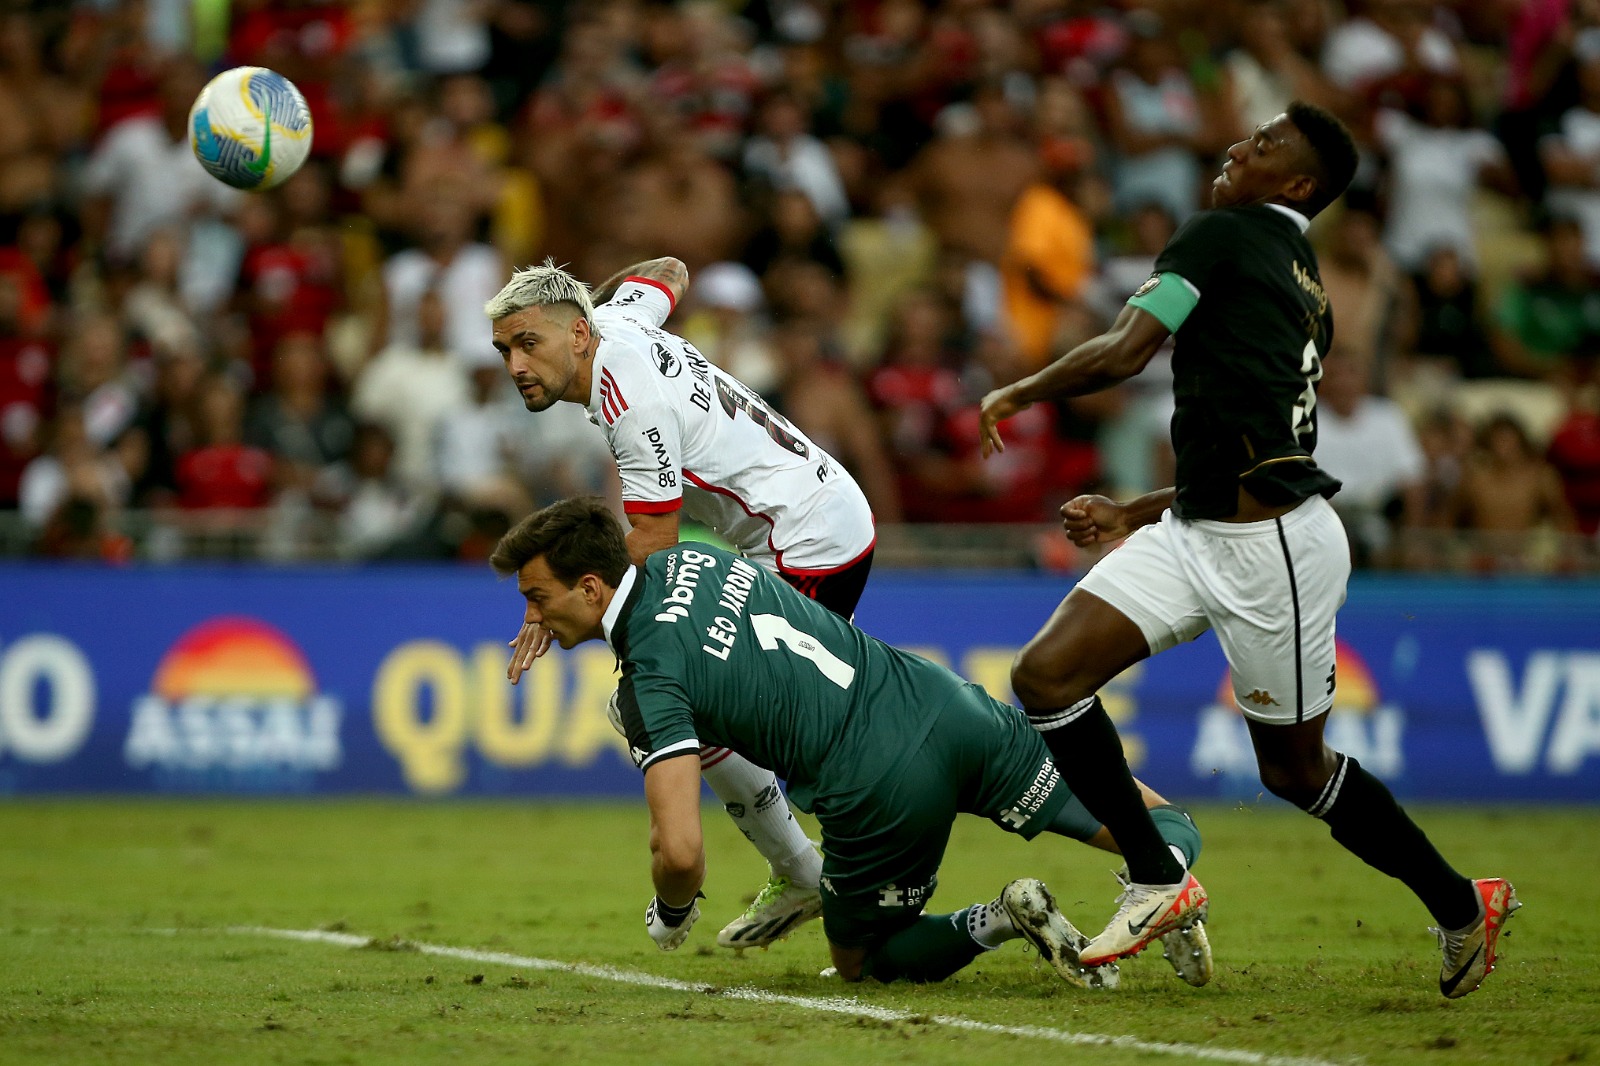 Vasco gastou R$87 milhões na pior defesa do Campeonato Brasileiro (Photo by Wagner Meier/Getty Images)